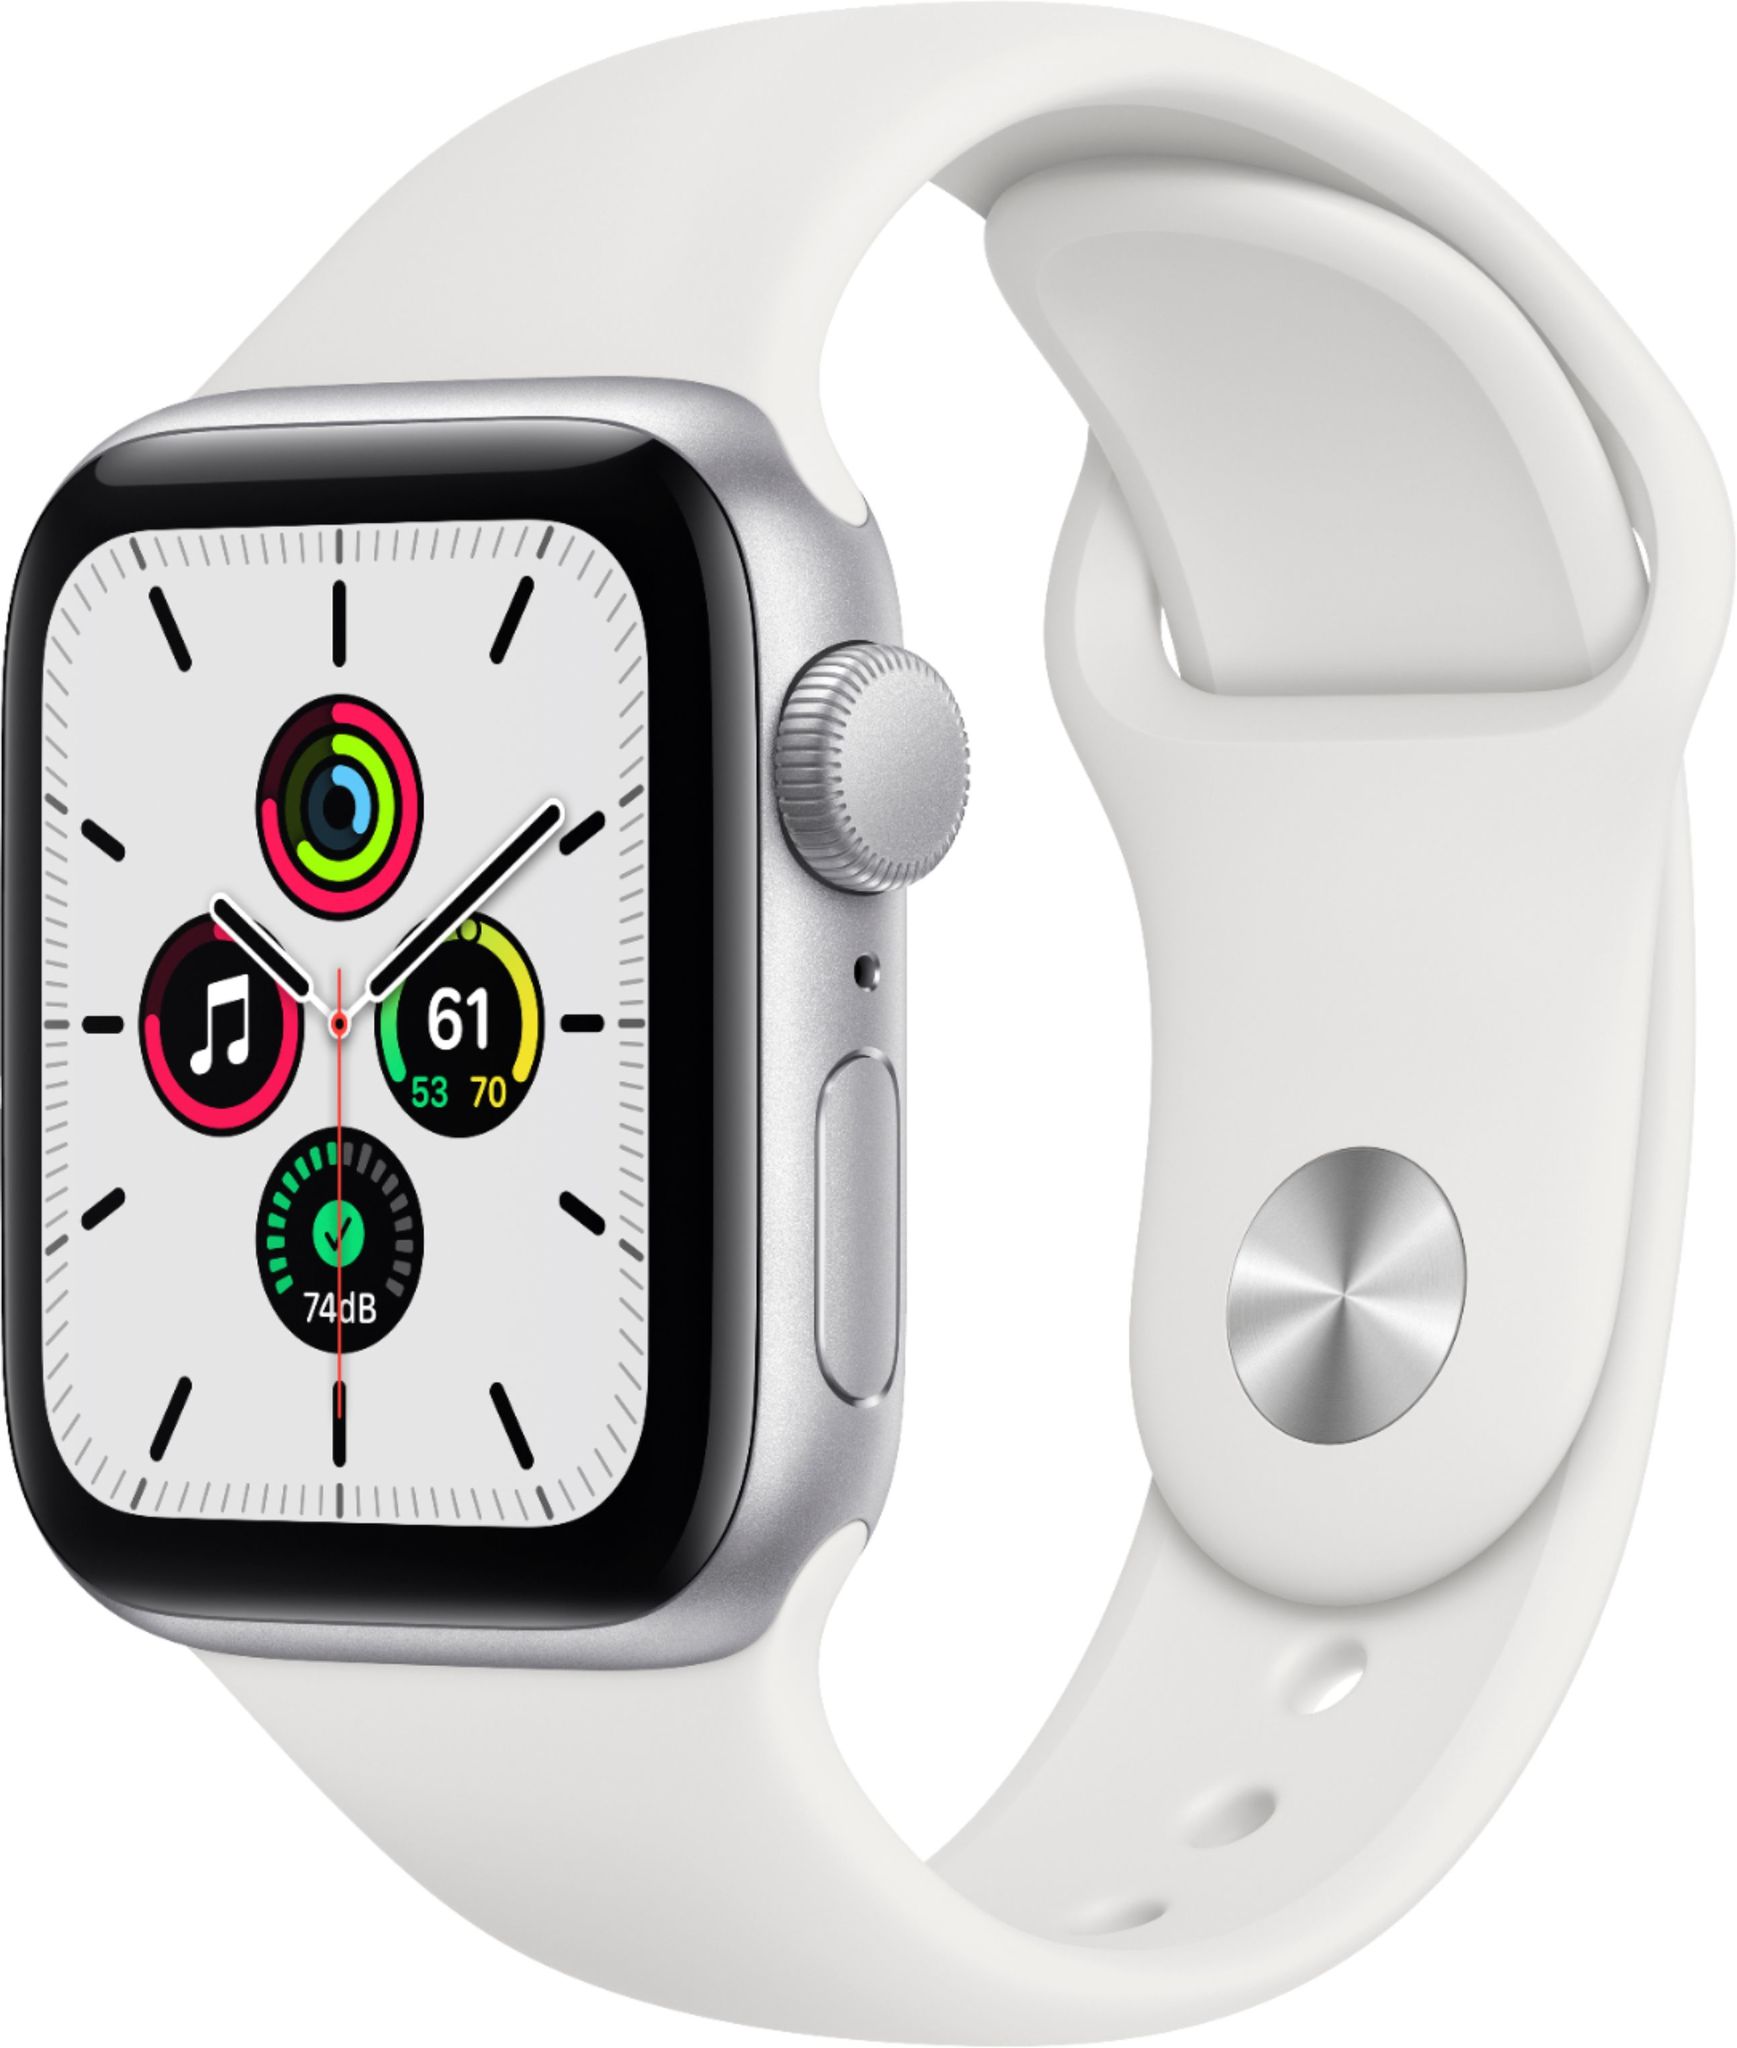 Apple Watch Se Gps White Silver